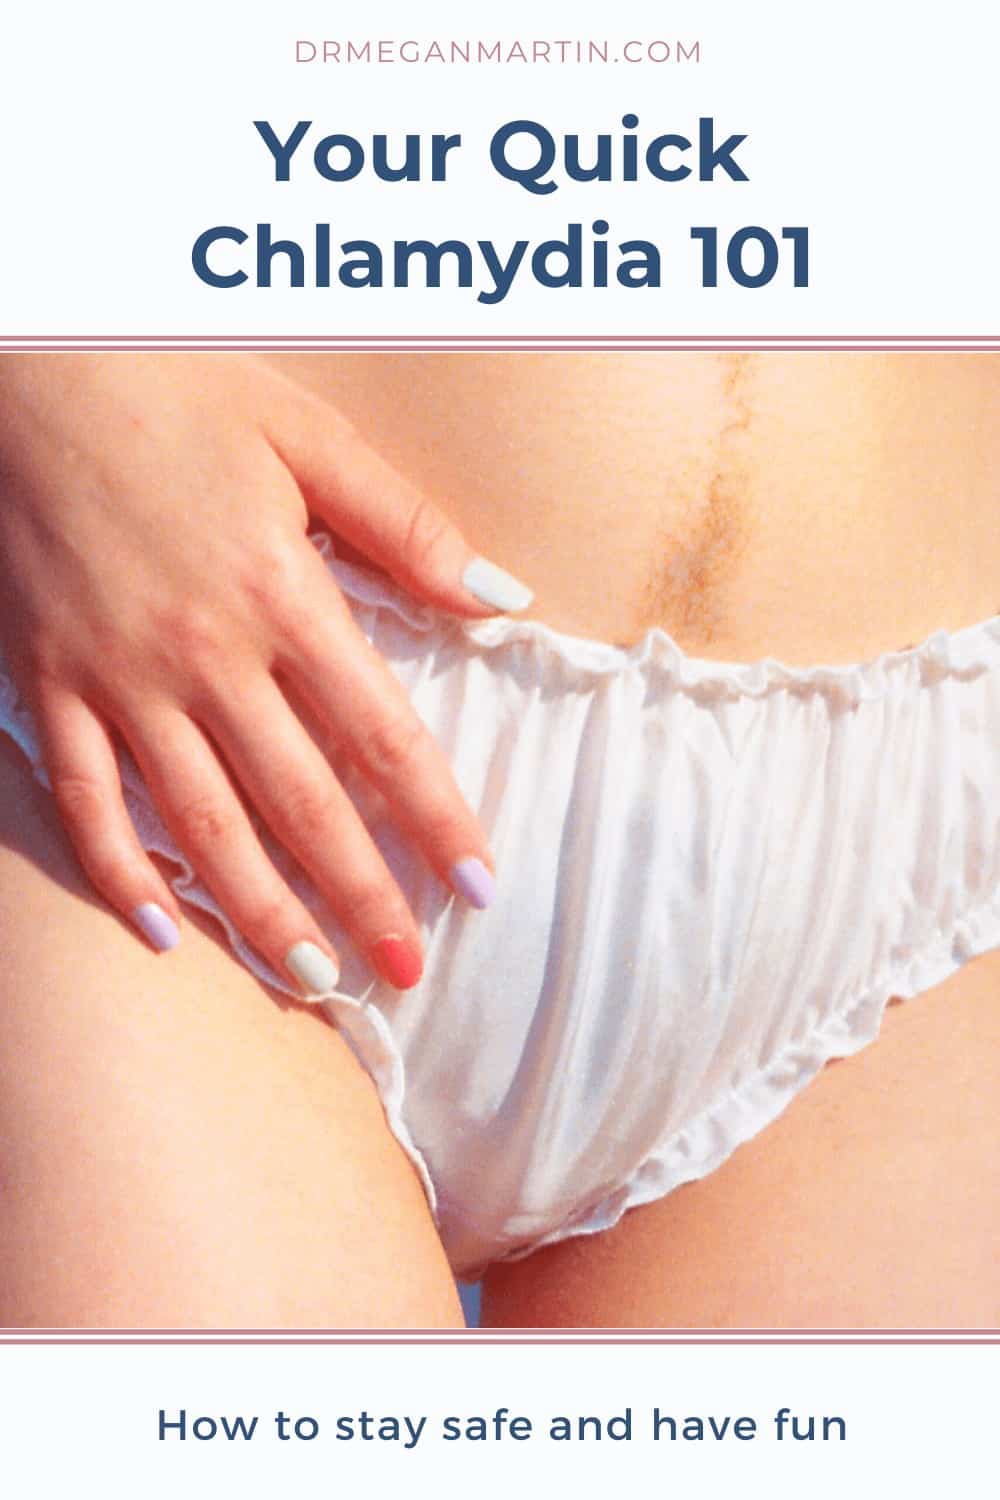 Your quick chlamydia 101